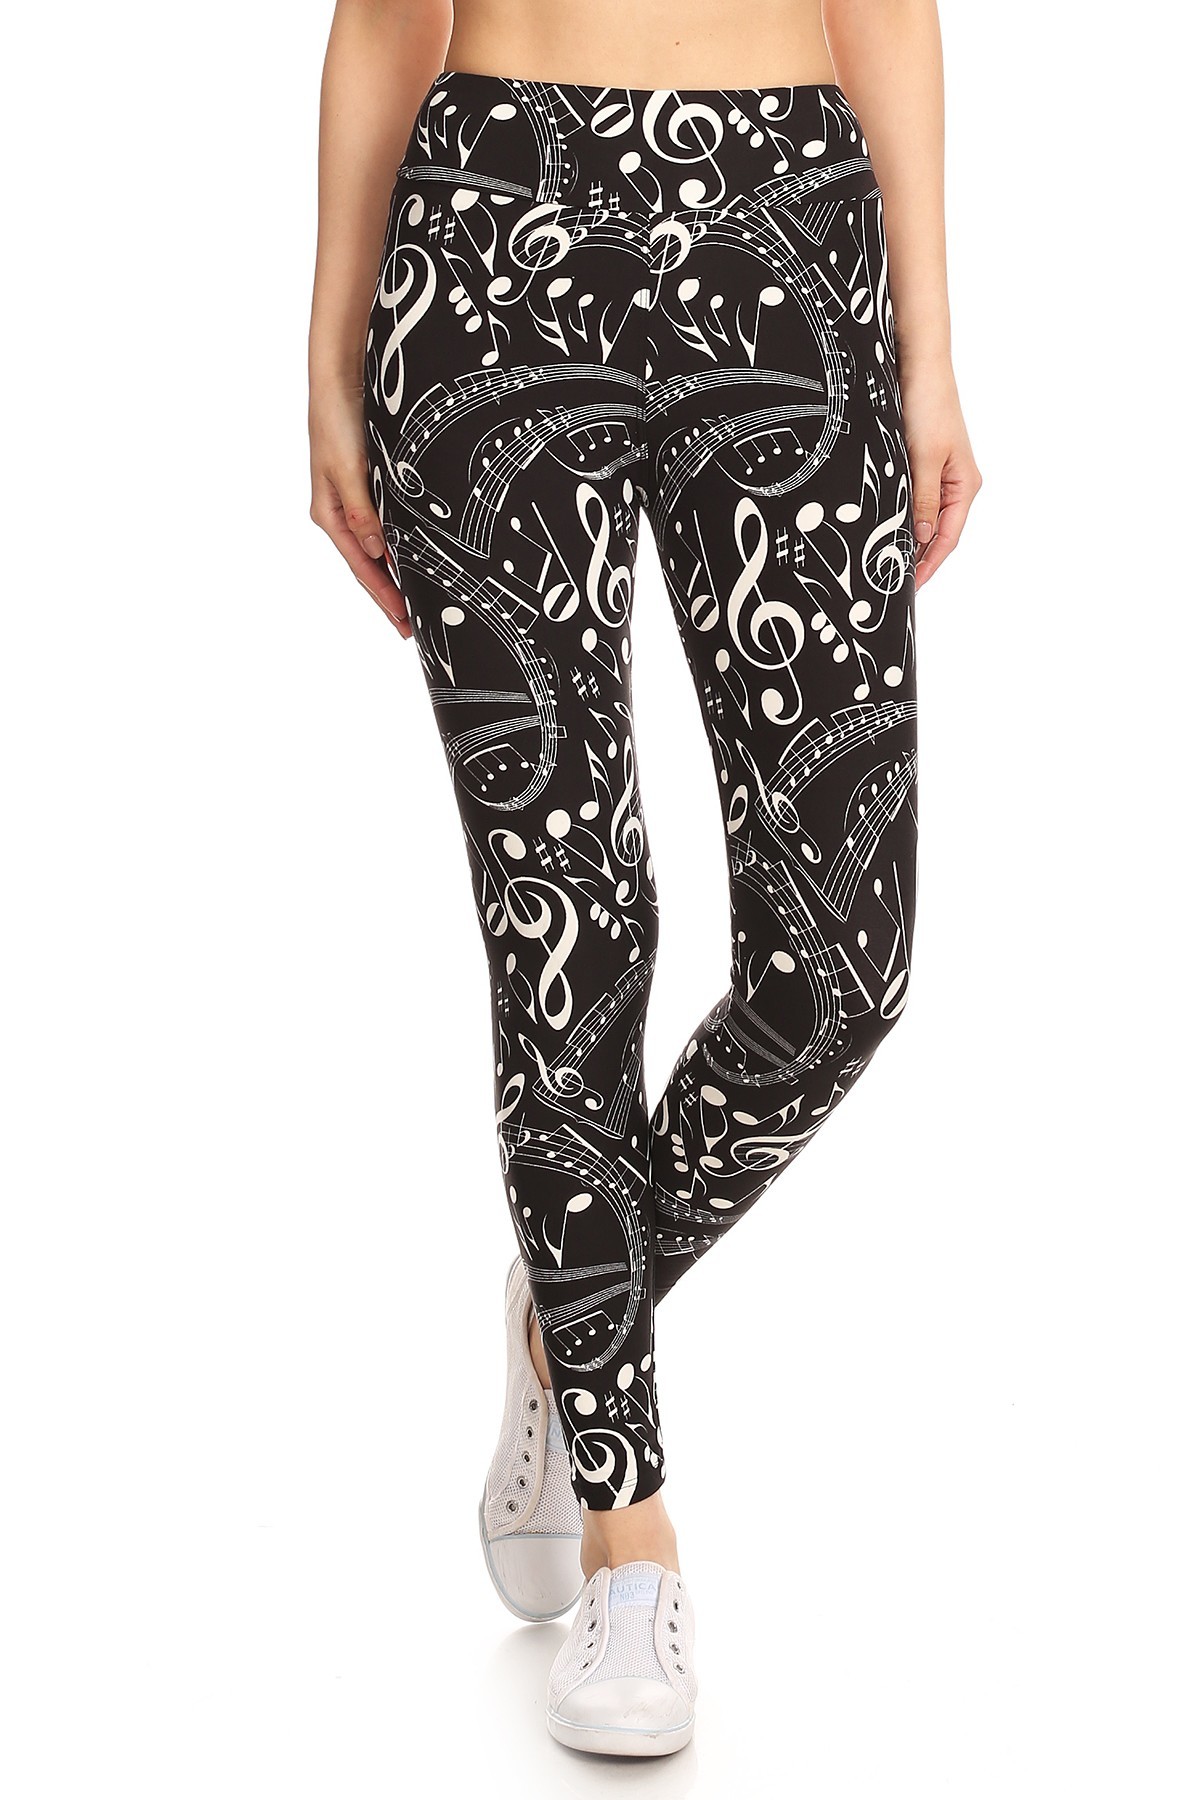 Yoga Style Banded Lined Music Note Print, Full Length Leggings In A Slim Fit  - Ixchel Apparel LLC